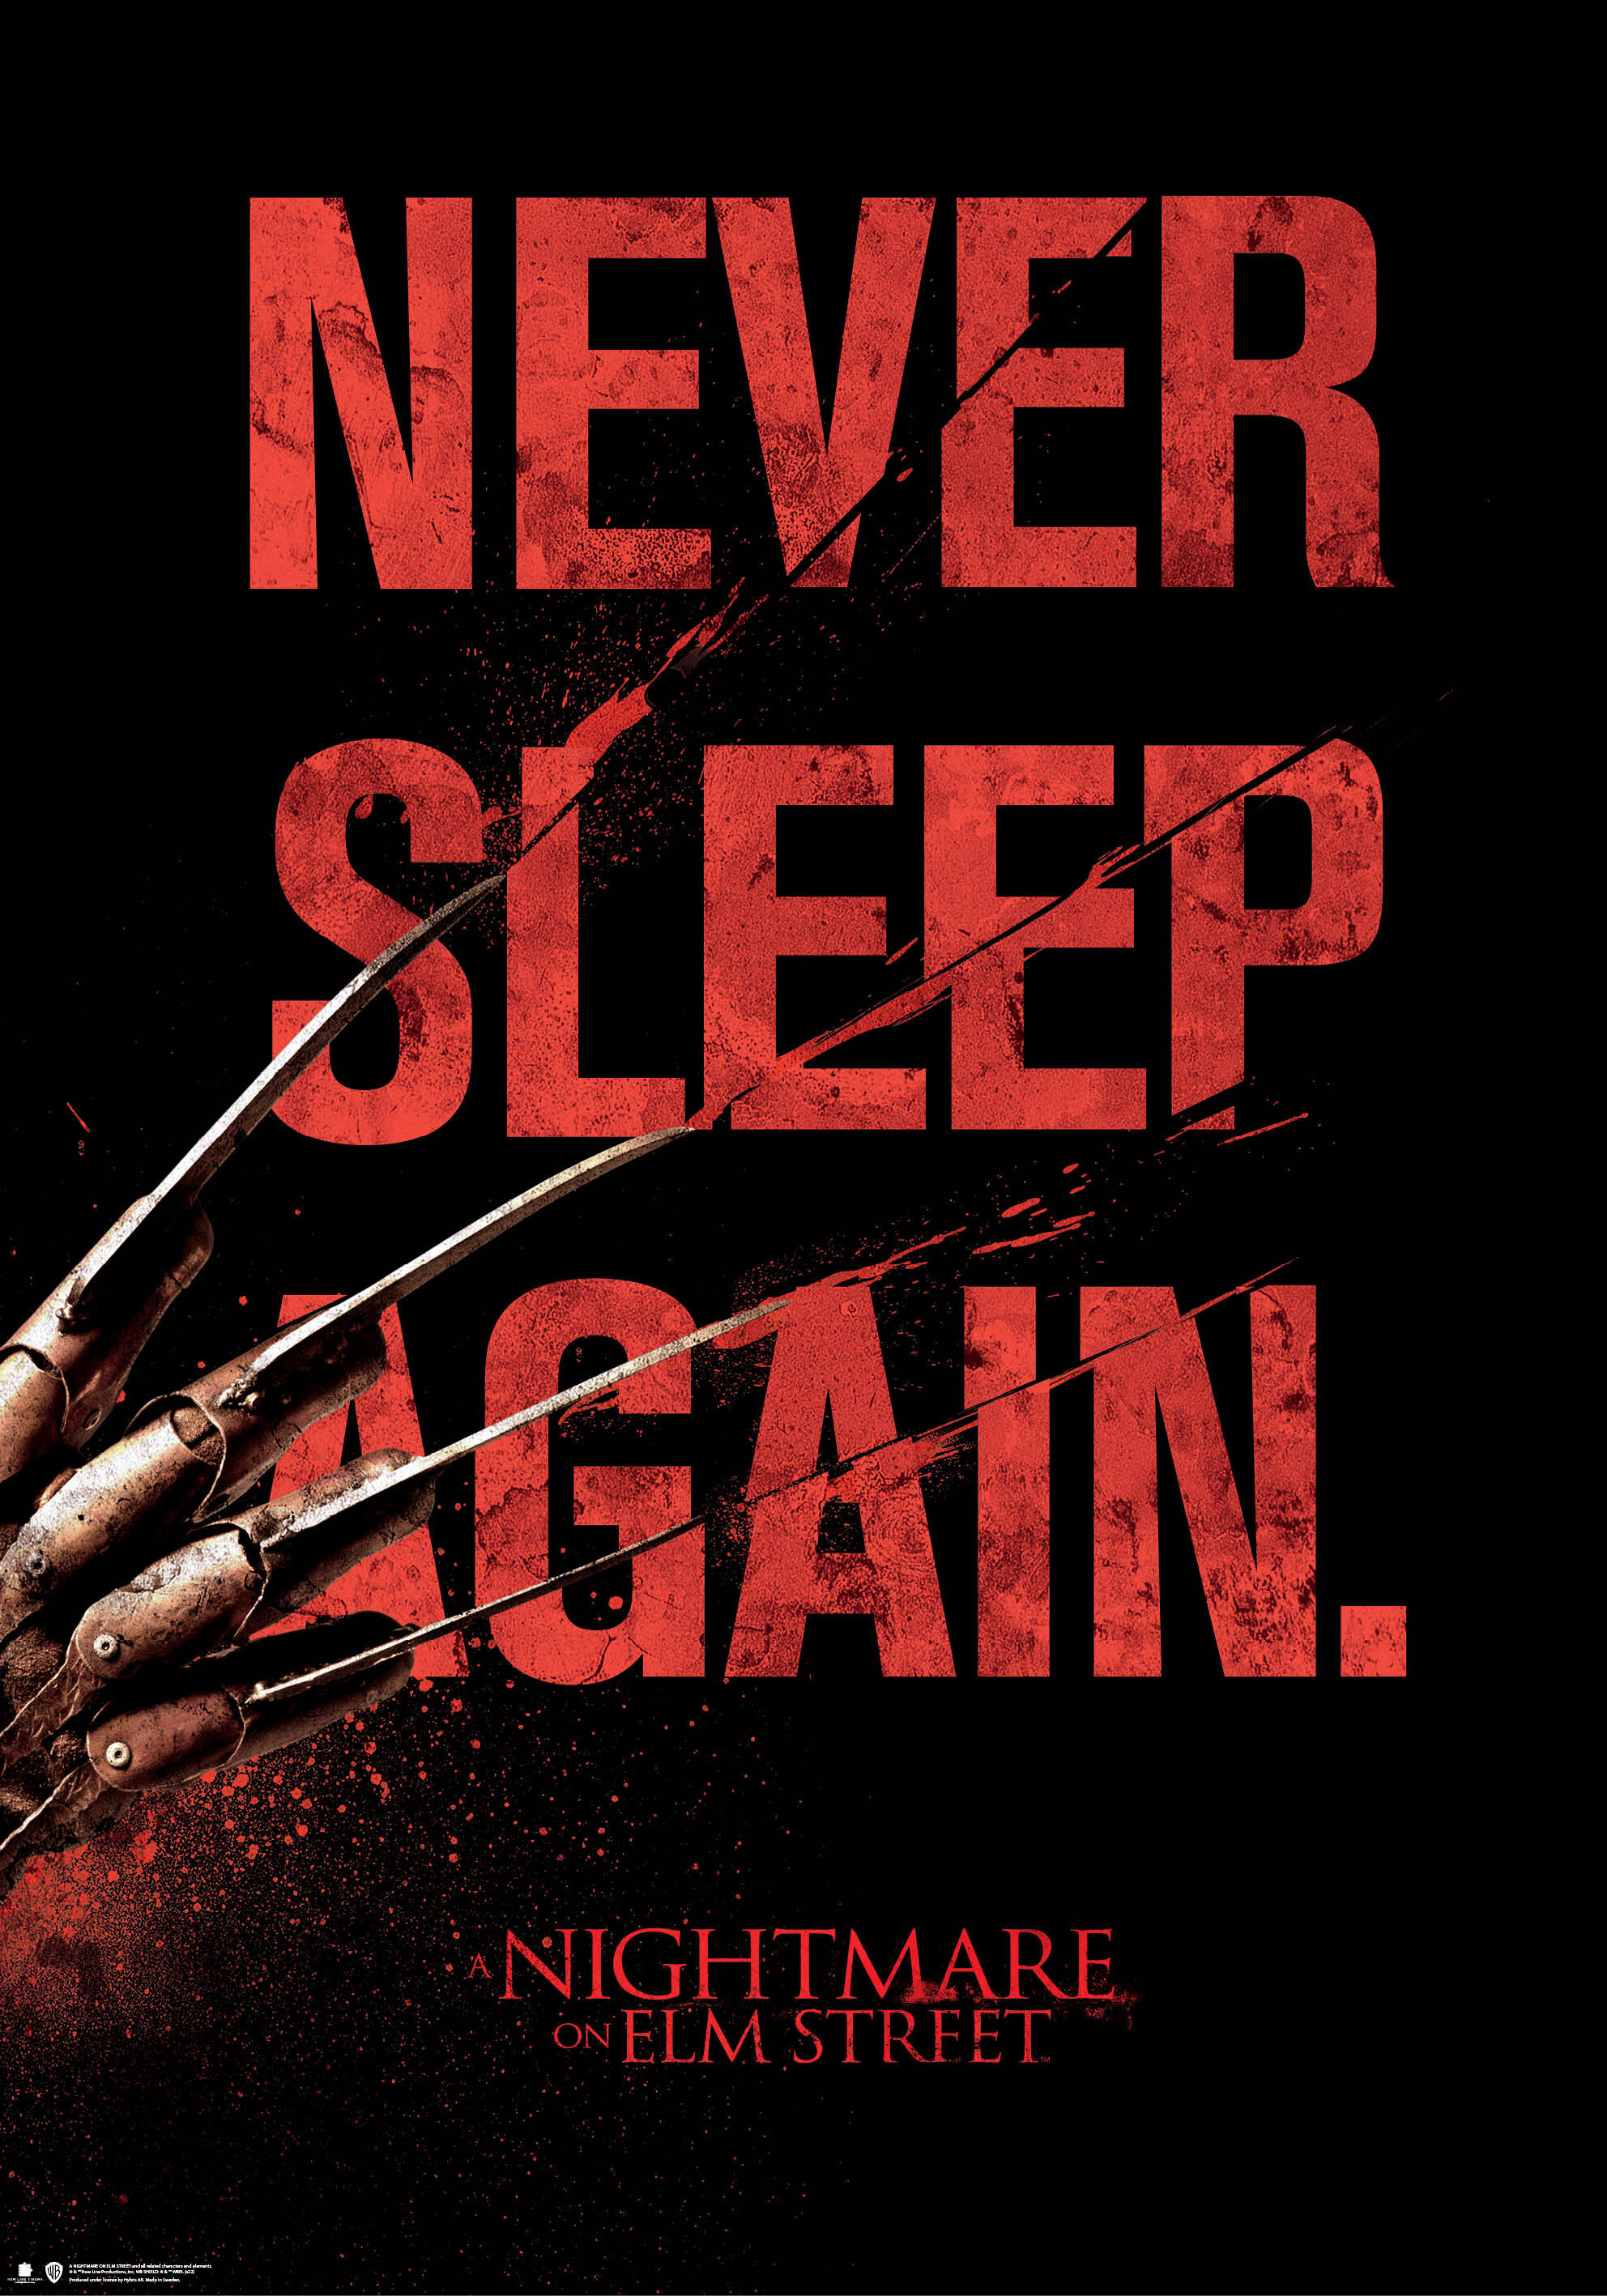 A Nightmare On Elm Street - Never Sleep Again Poster